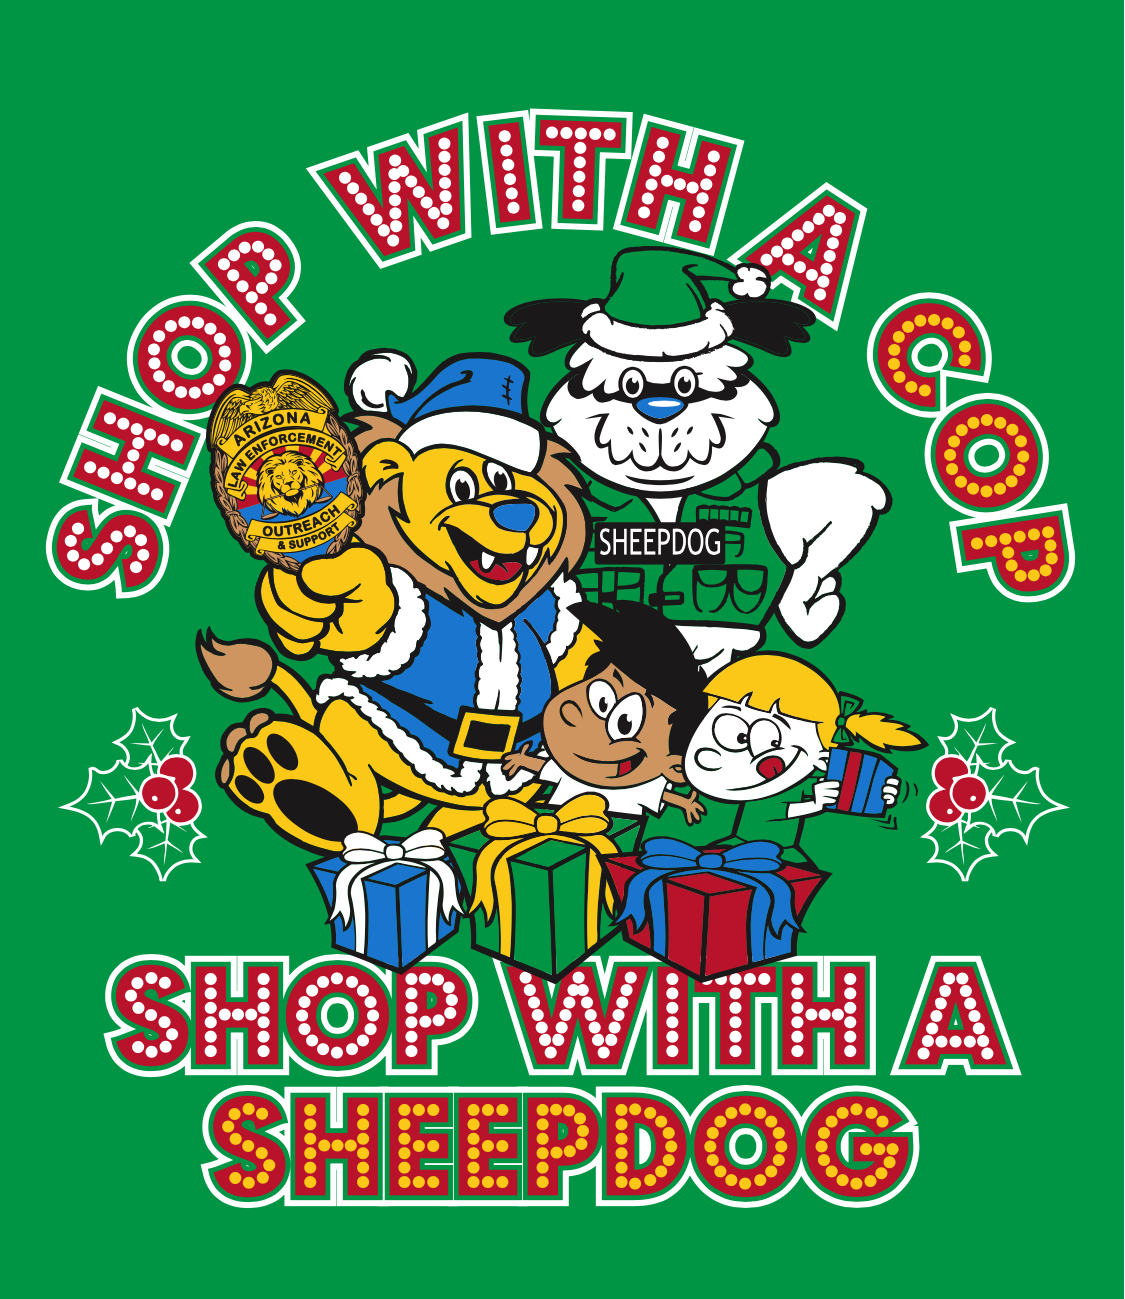 Shop With a Cop Shop With a Sheepdog 2017 Logo